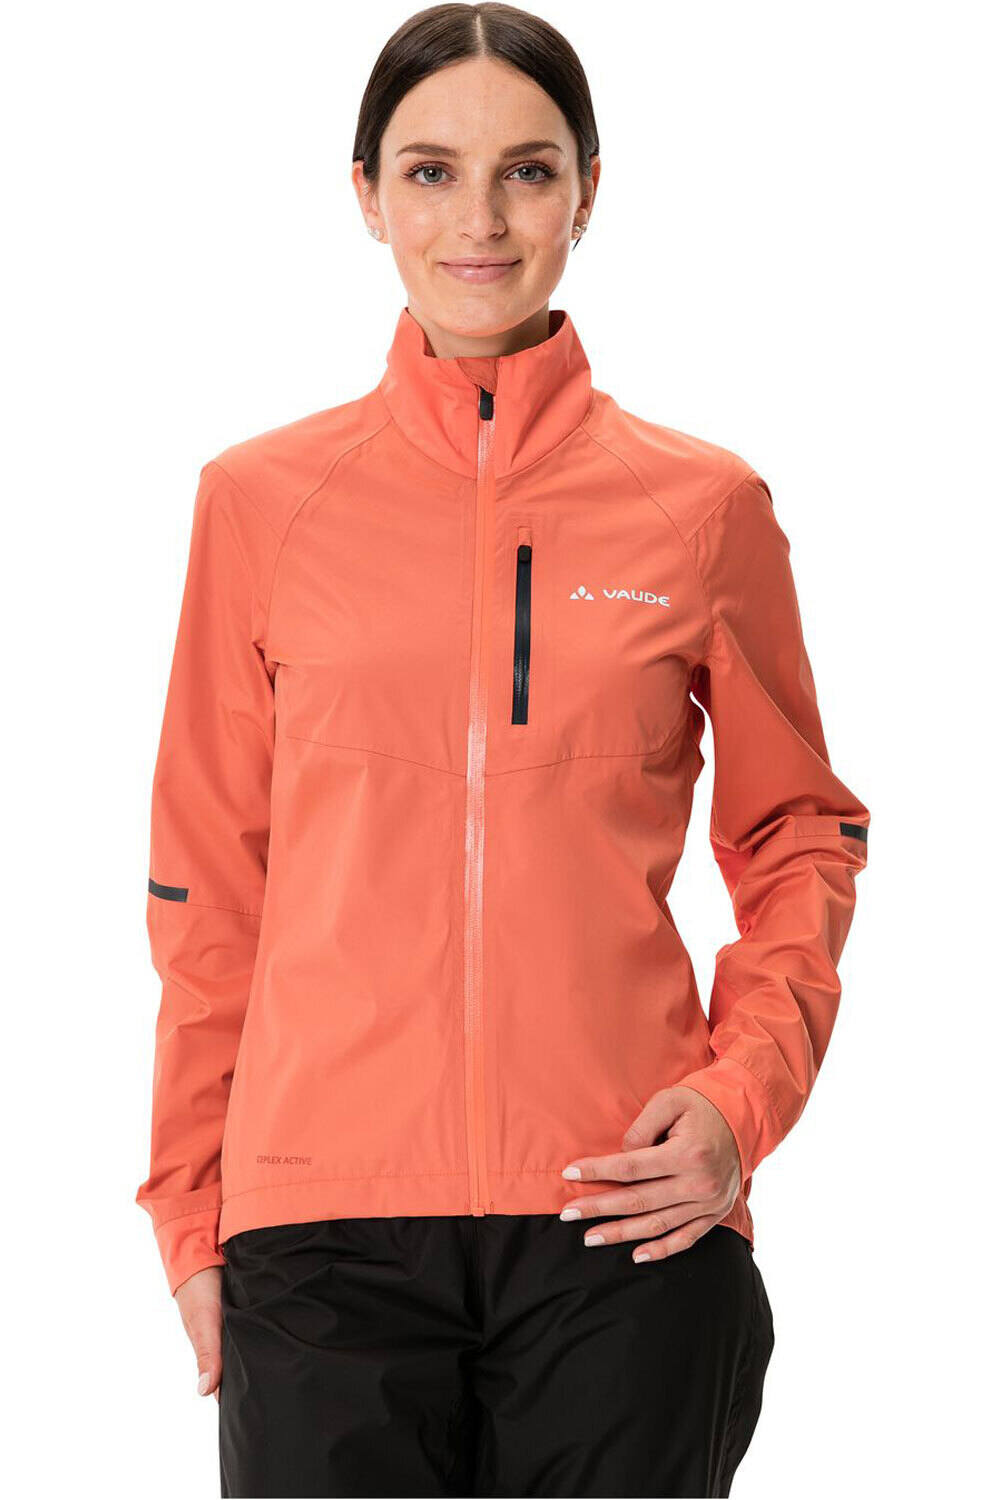 Vaude chaqueta impermeable ciclismo mujer Women's Kuro Rain Jacket vista frontal